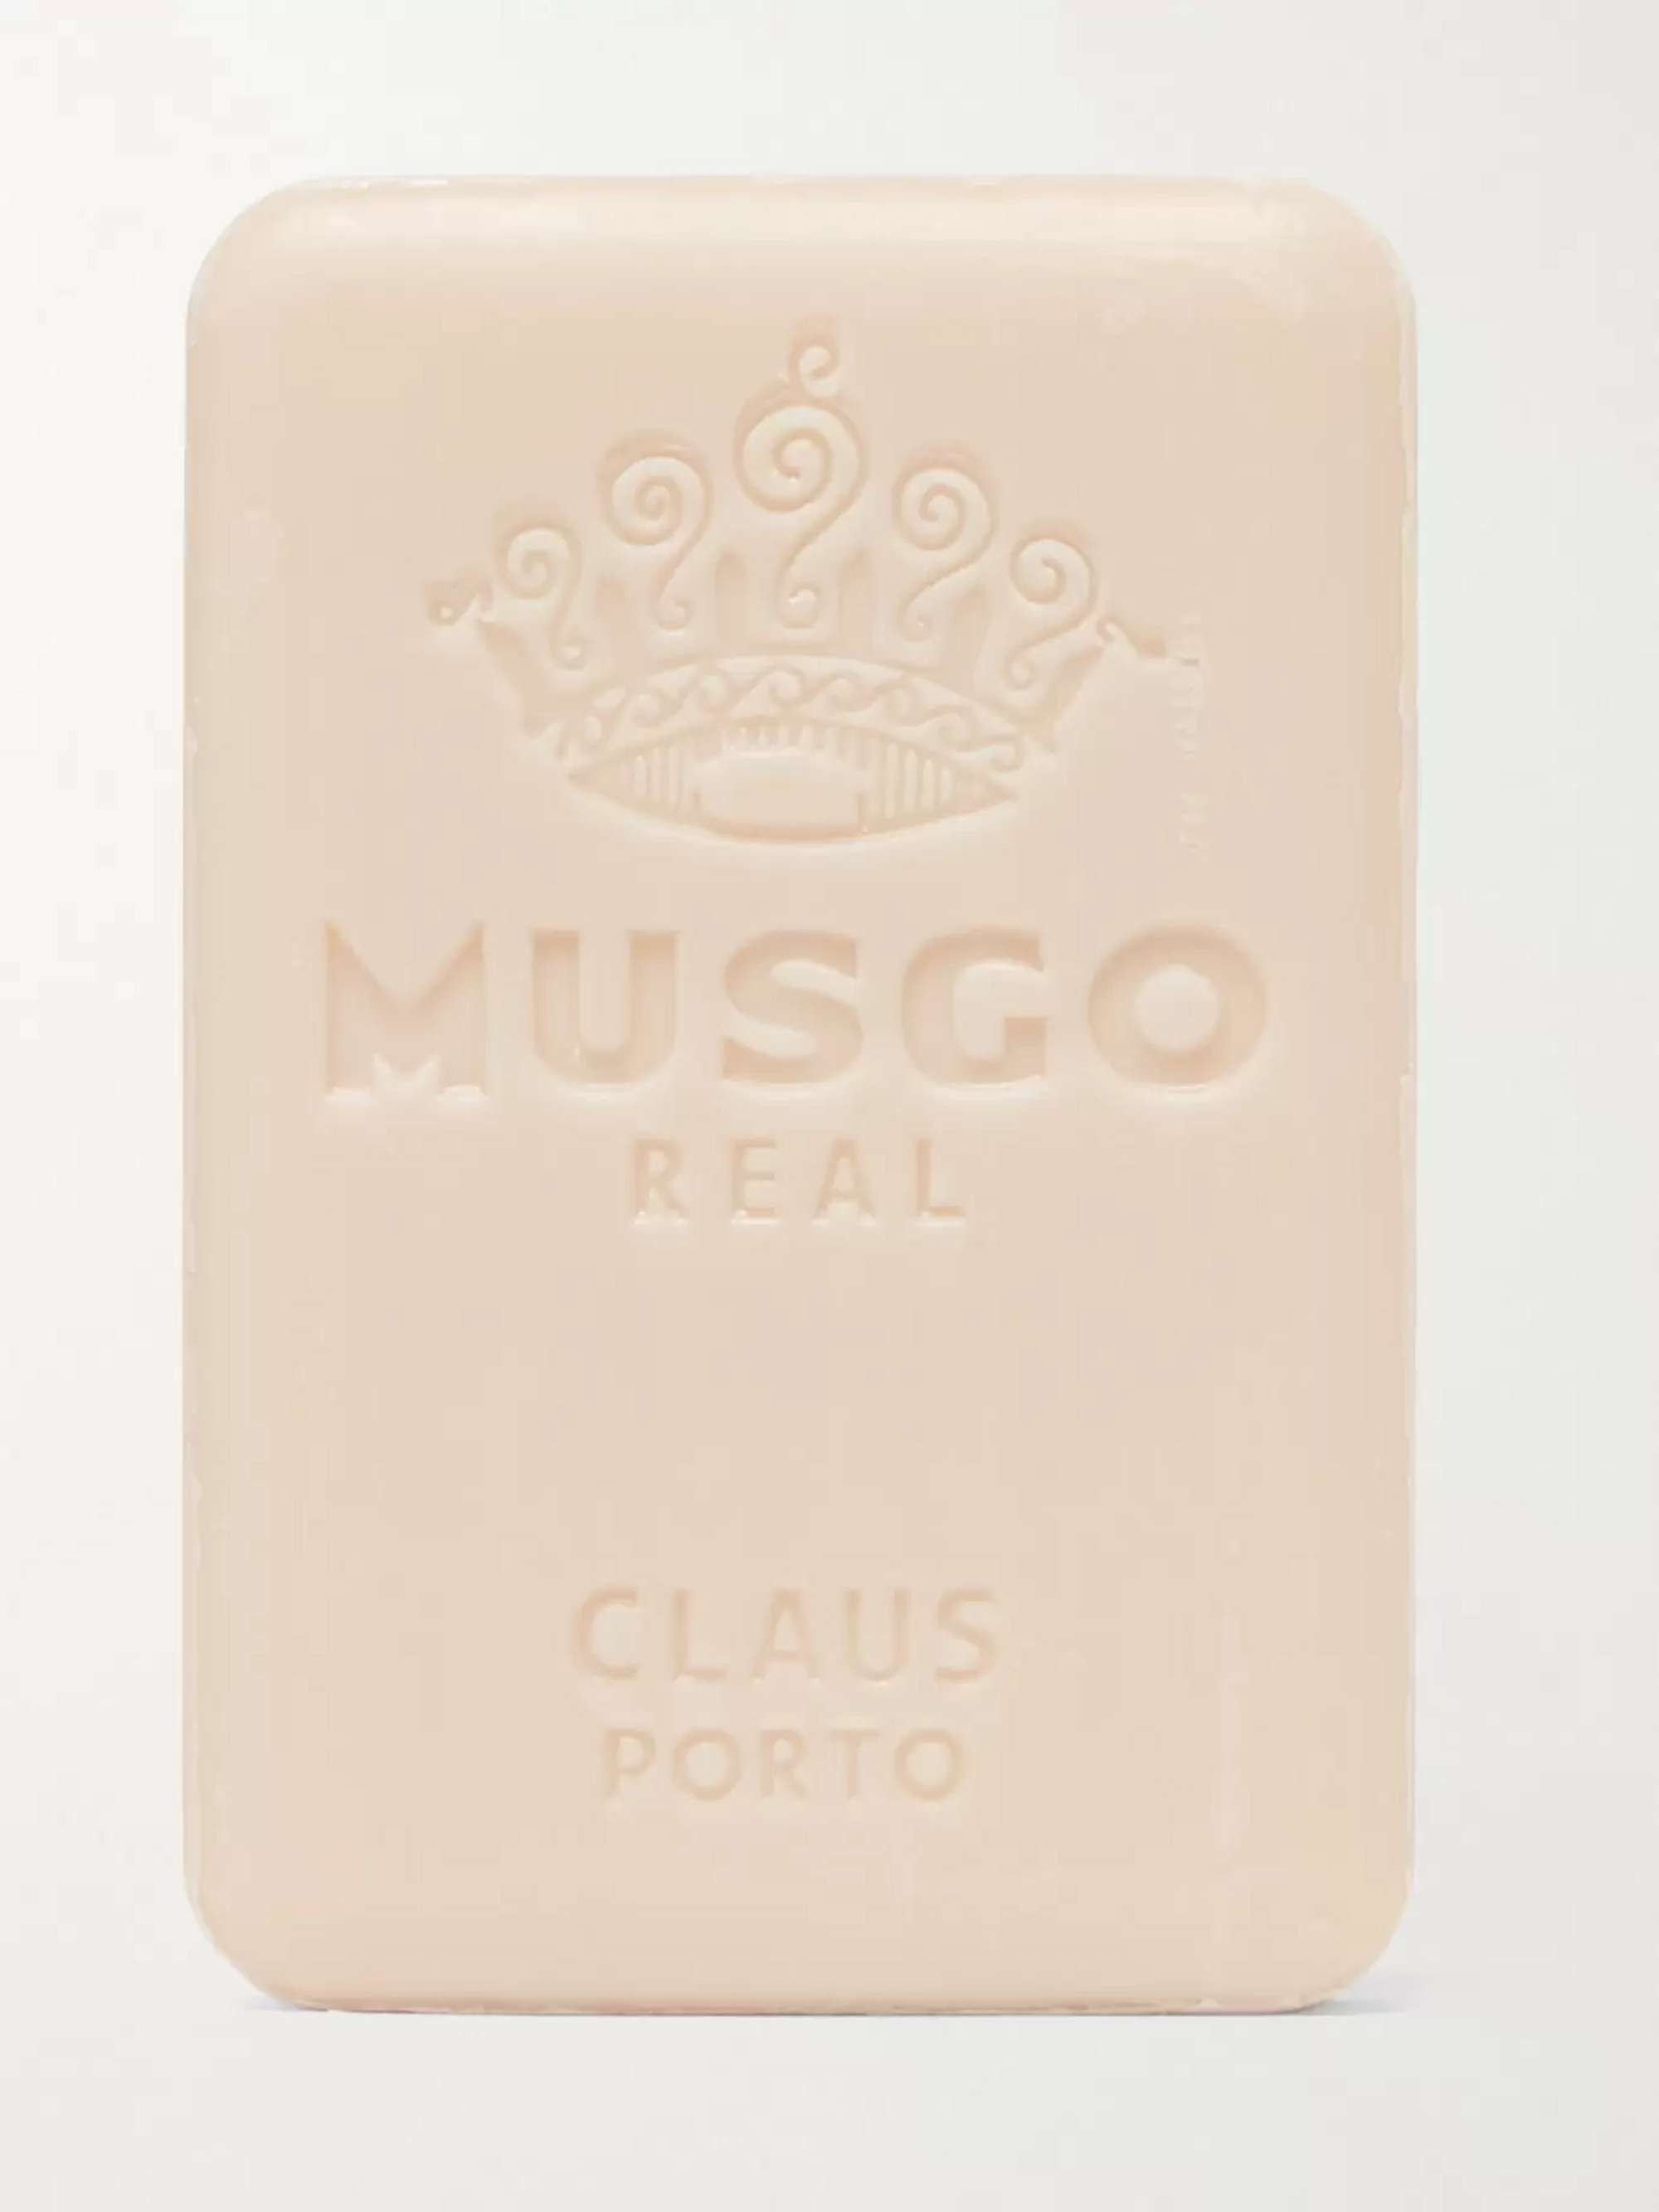 CLAUS PORTO Orange Amber Soap, 160g